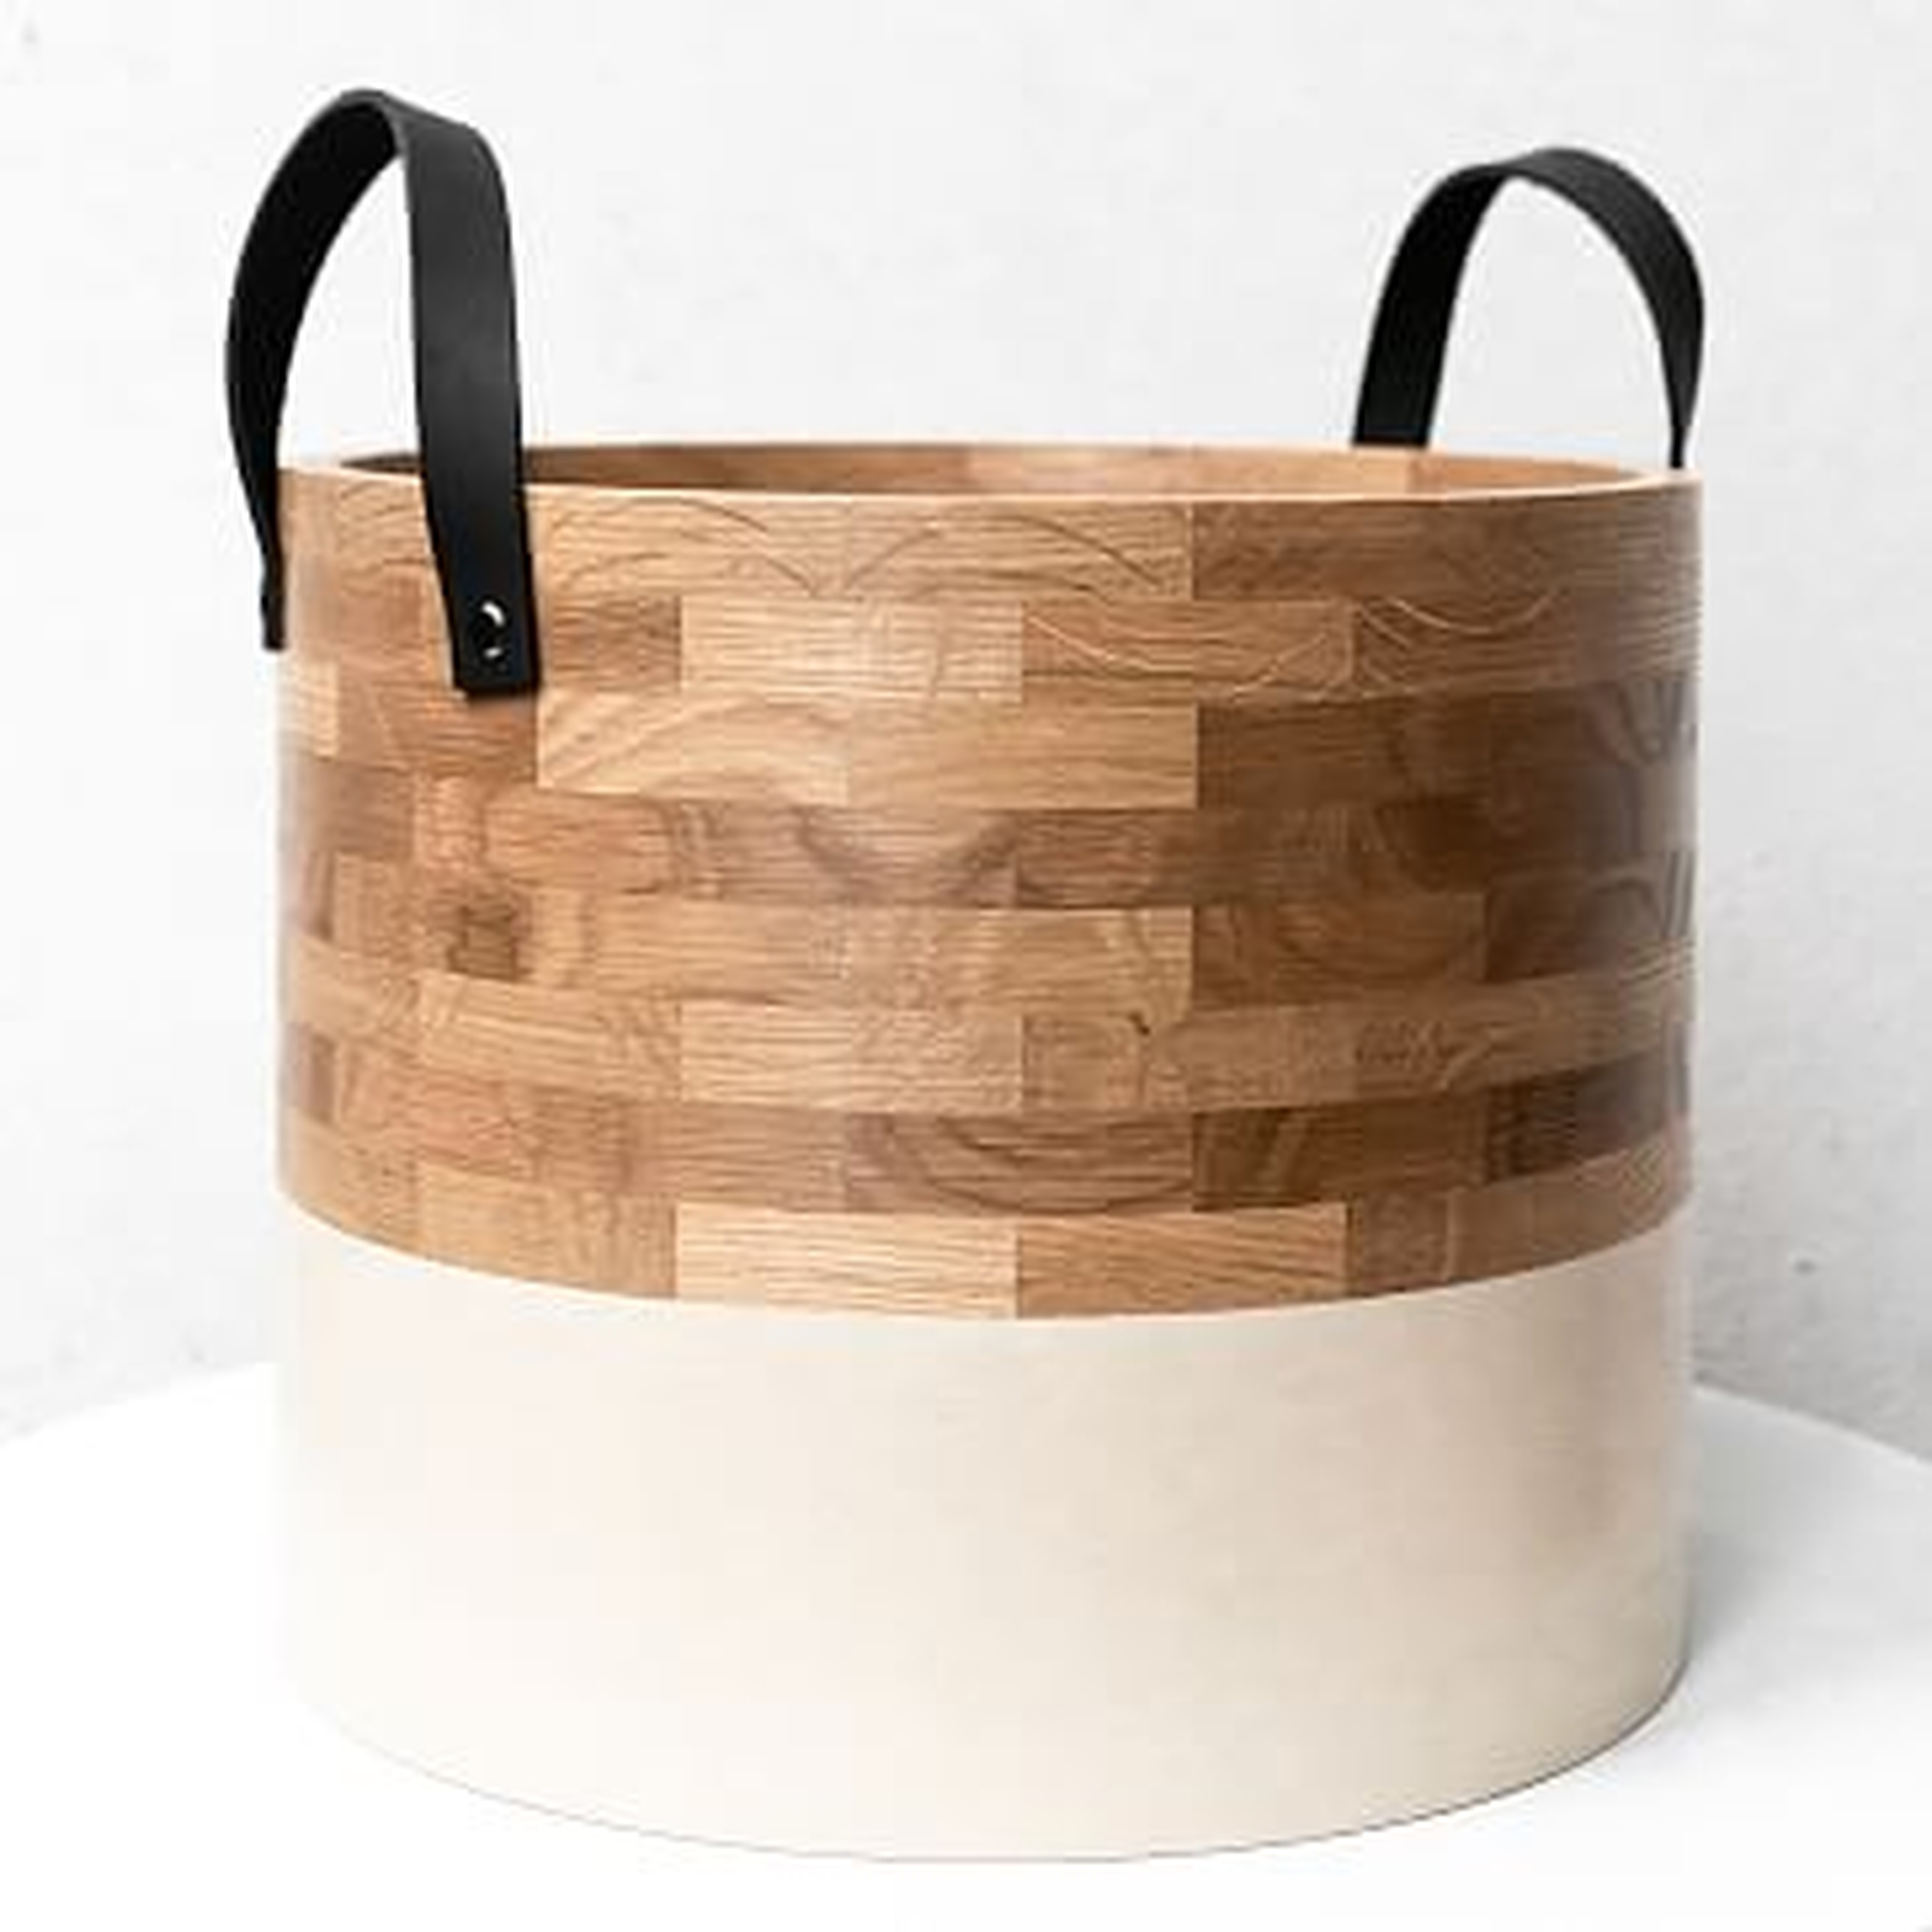 Large Dipped Basket, White Oak, Tan With Black Handles - West Elm